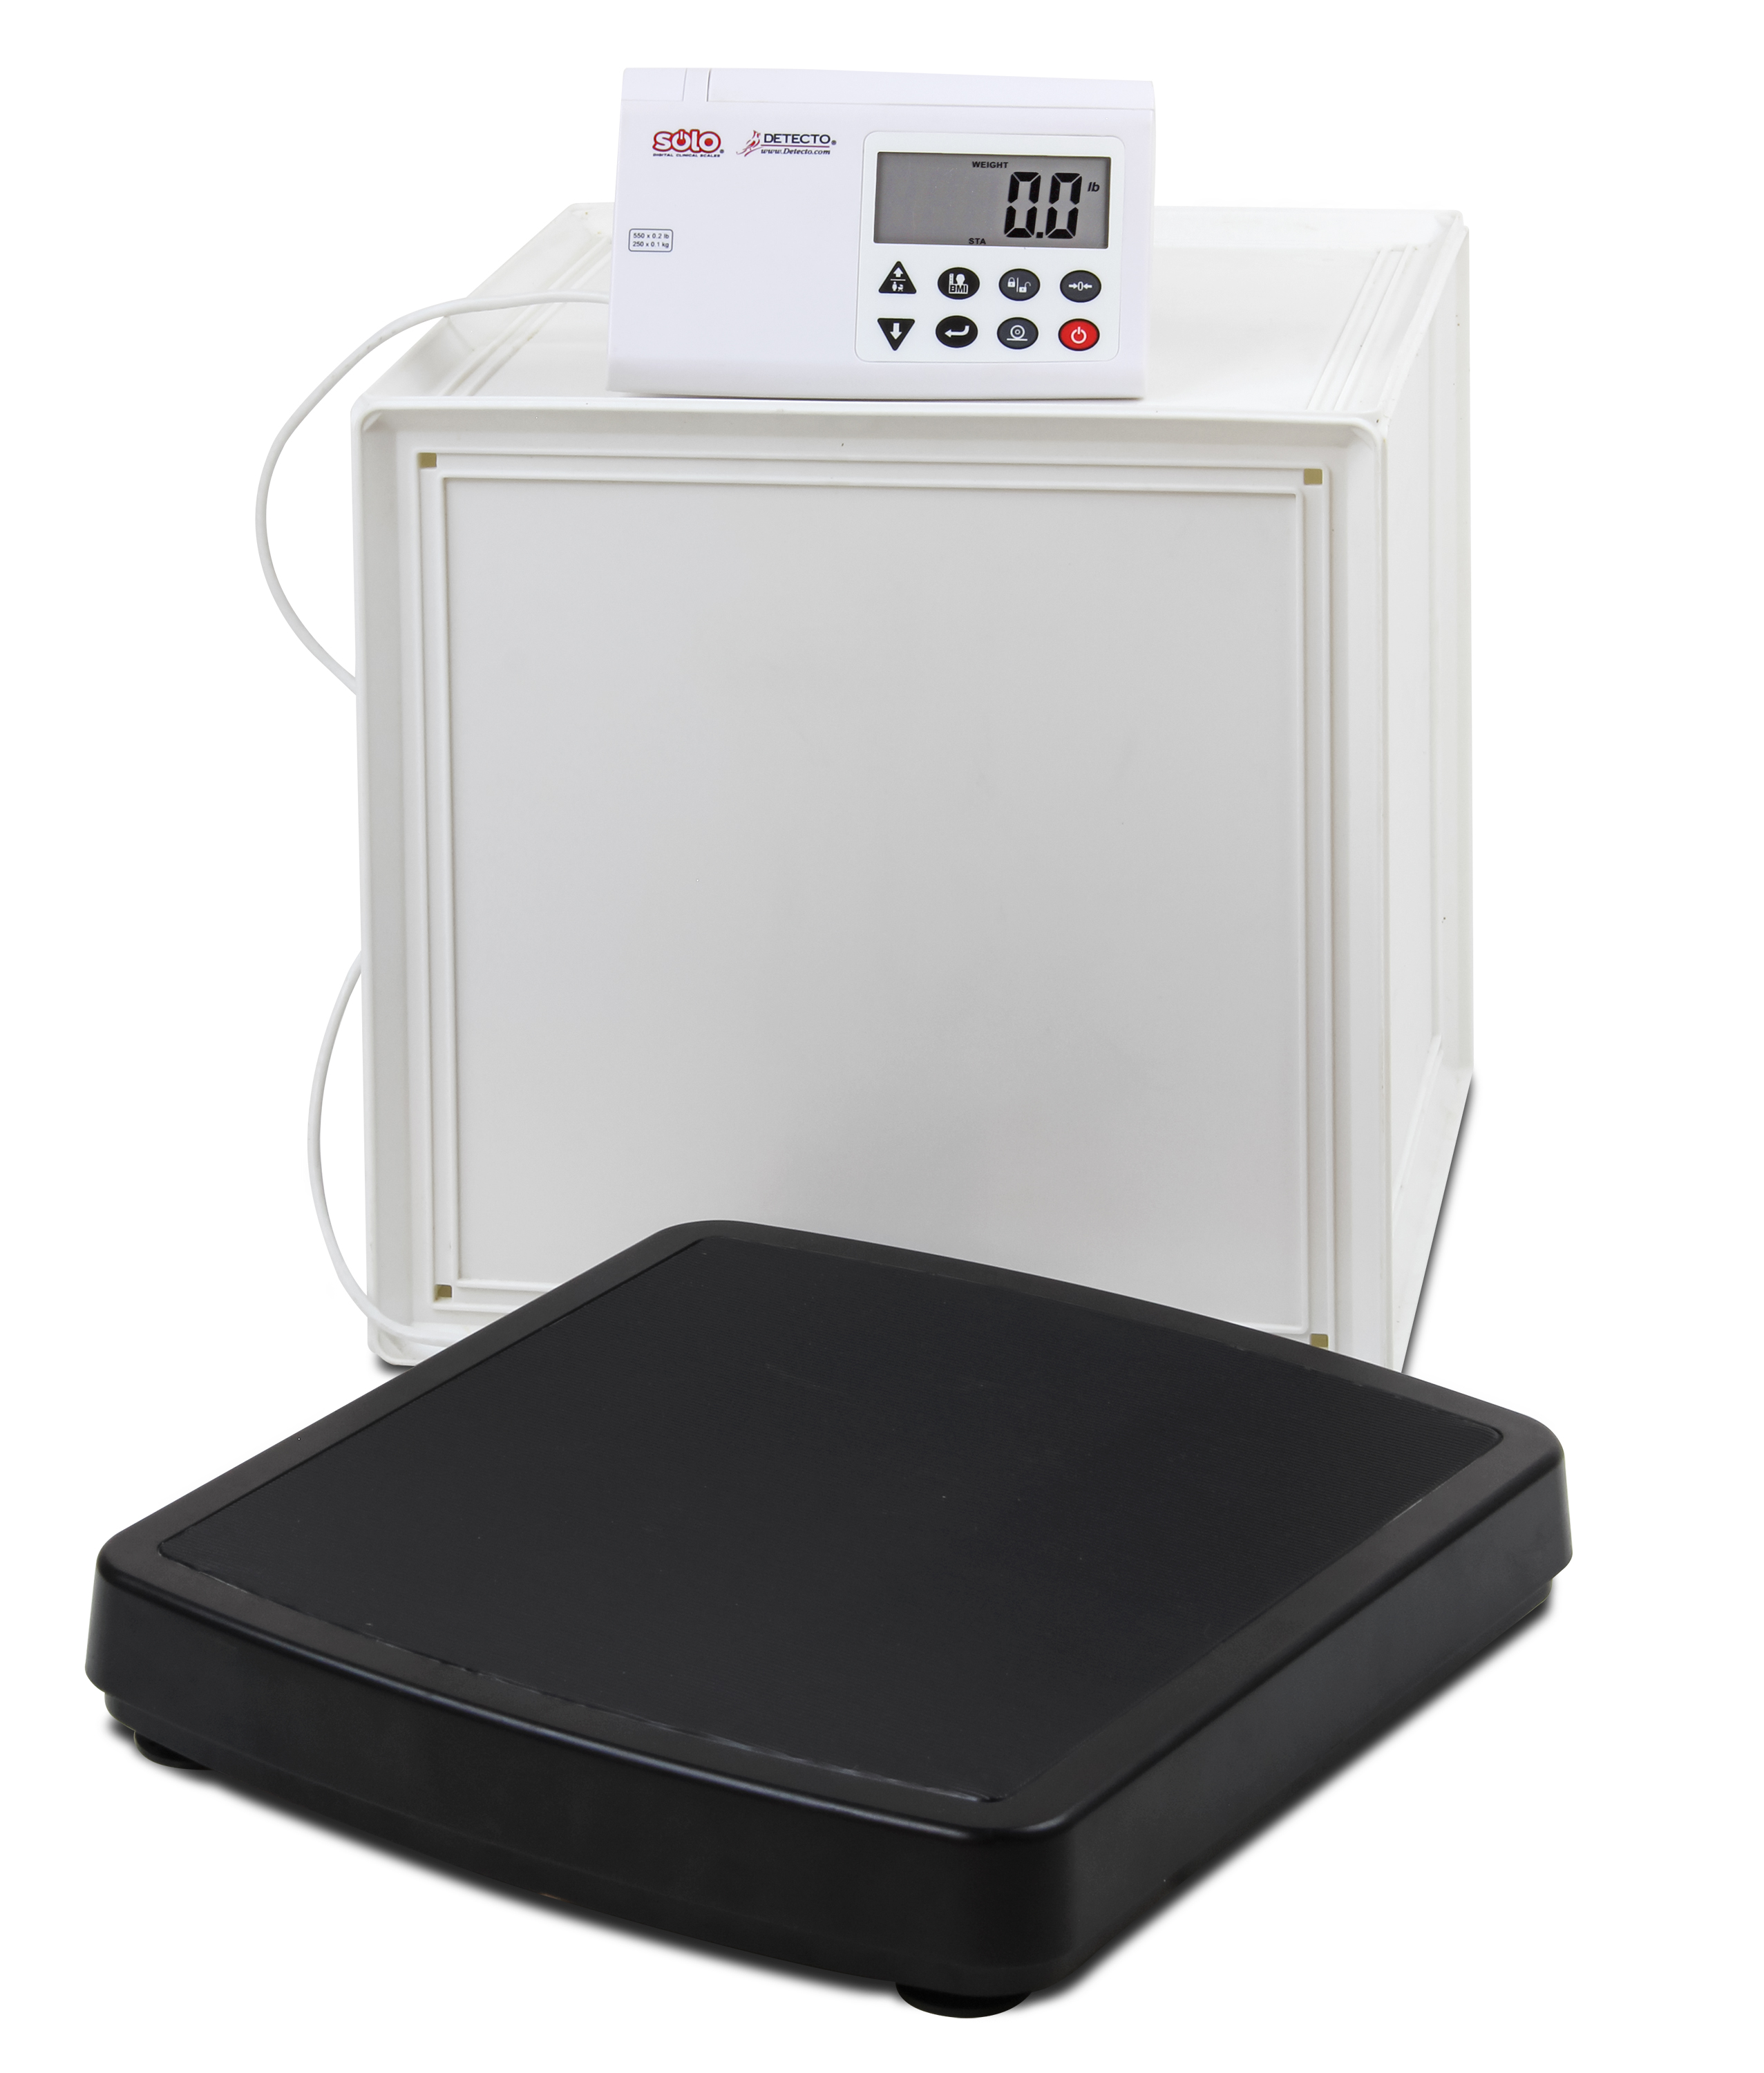 Detecto Digital In-Bed Scale 550 lbs Capacity